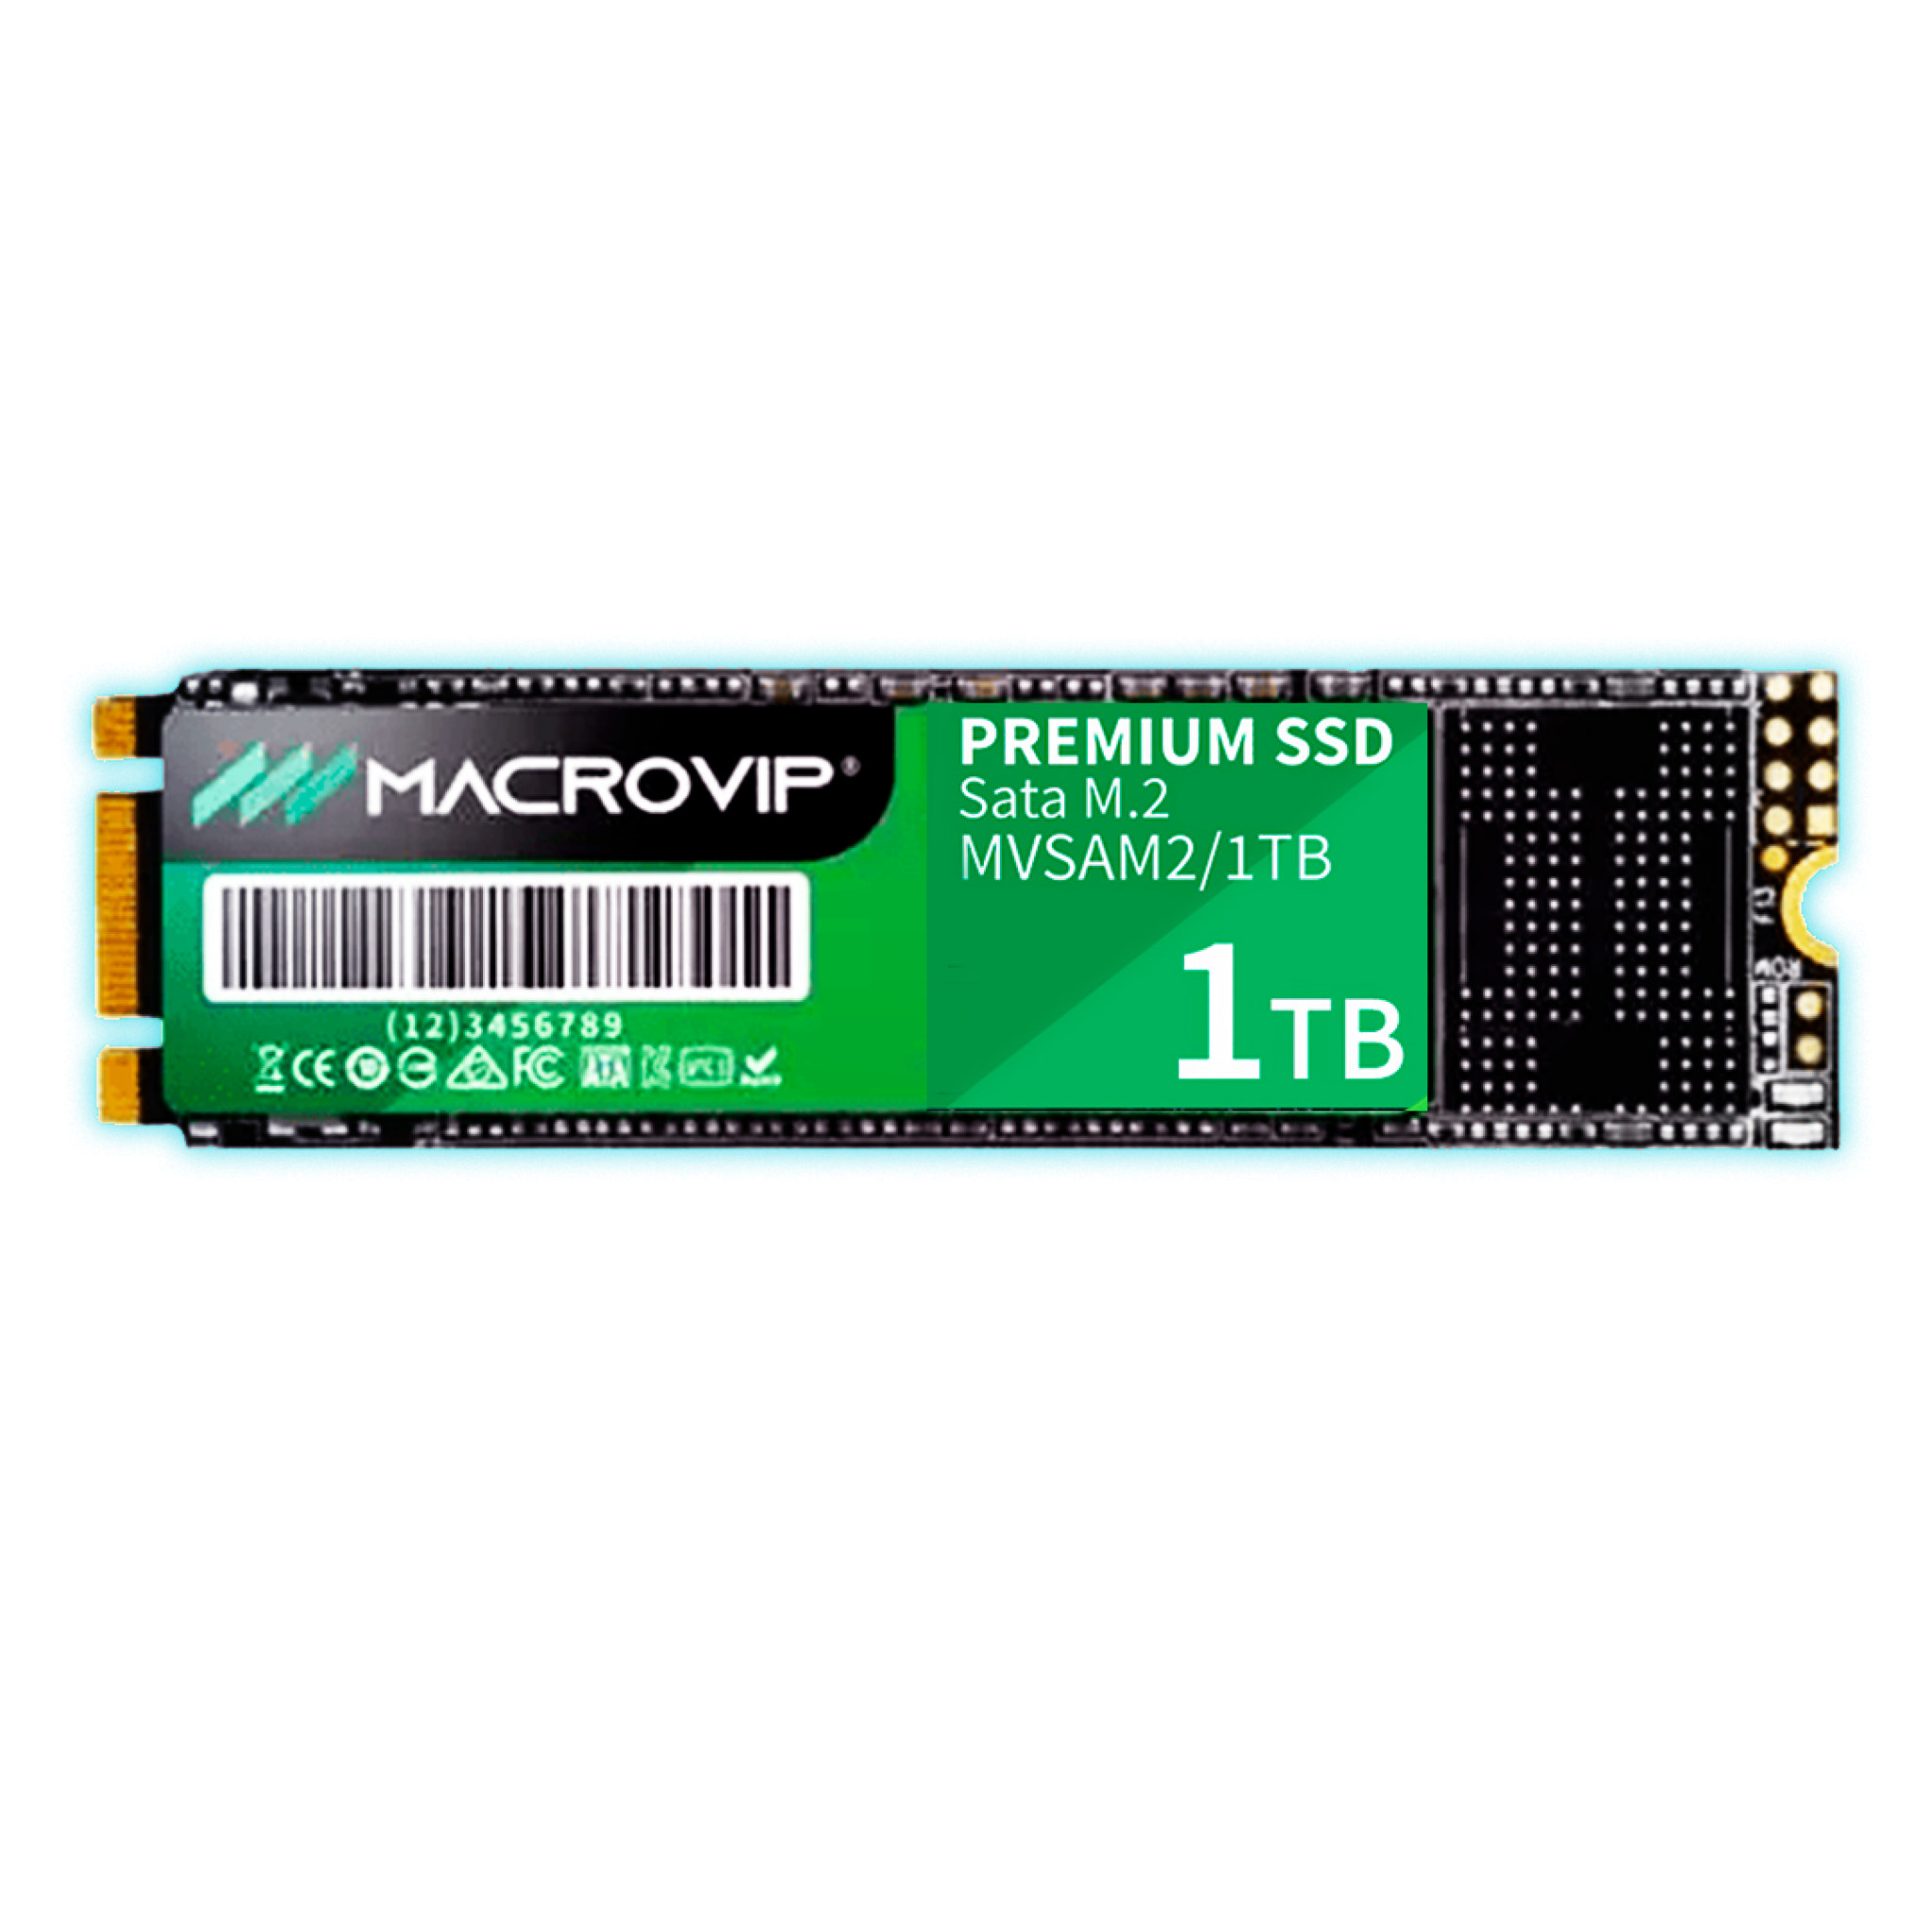 SSD 1TB M.2 SATA MACROVIP PREMIUM :: Serial Center